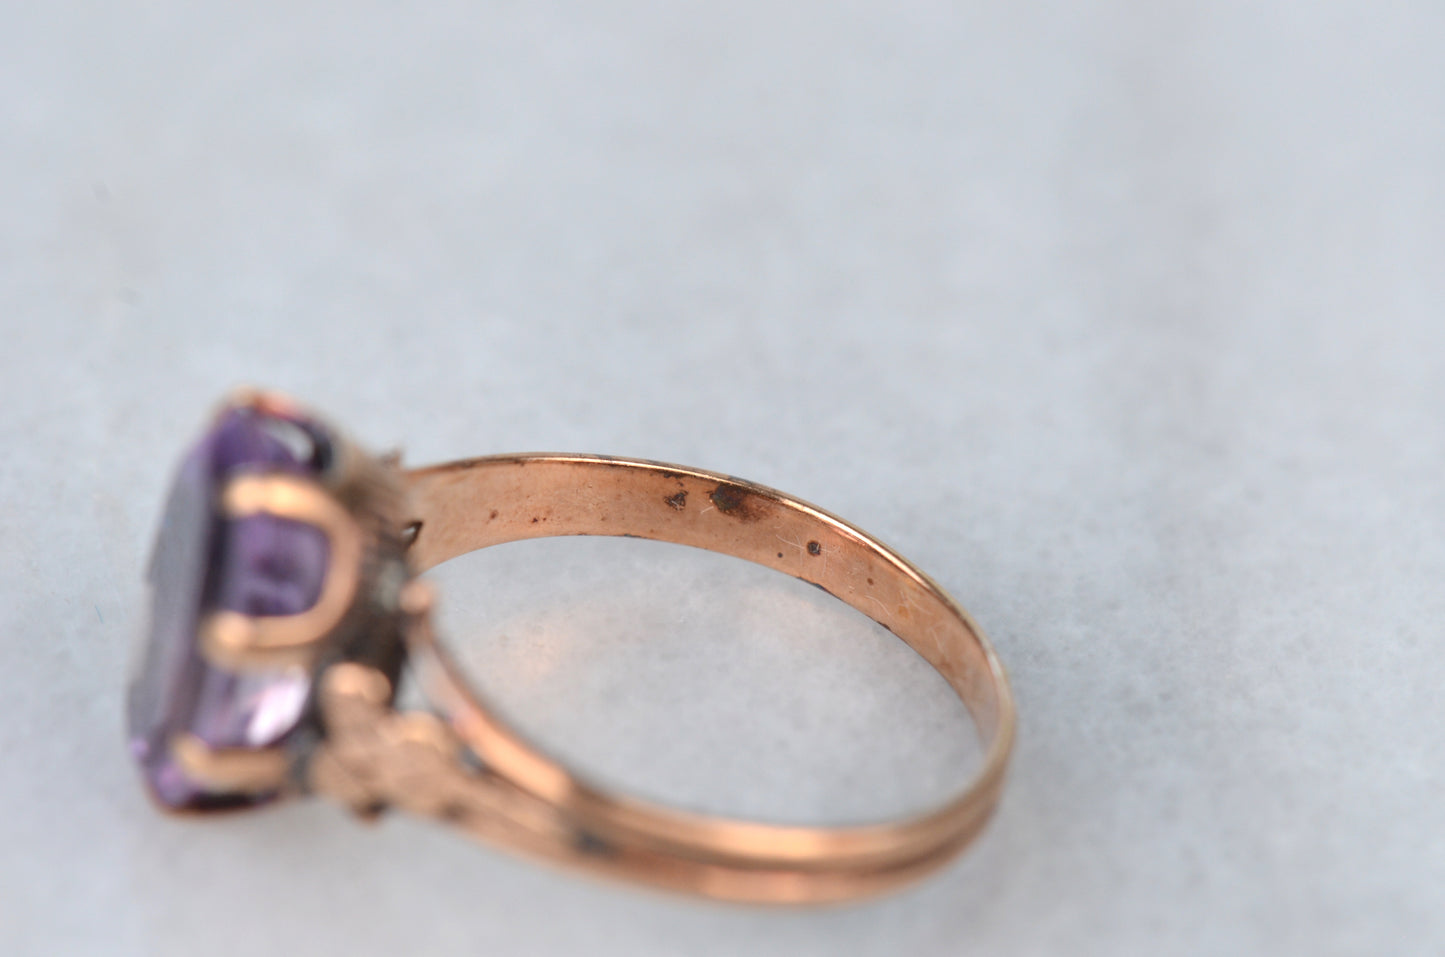 Romantic Victorian Amethyst Ring